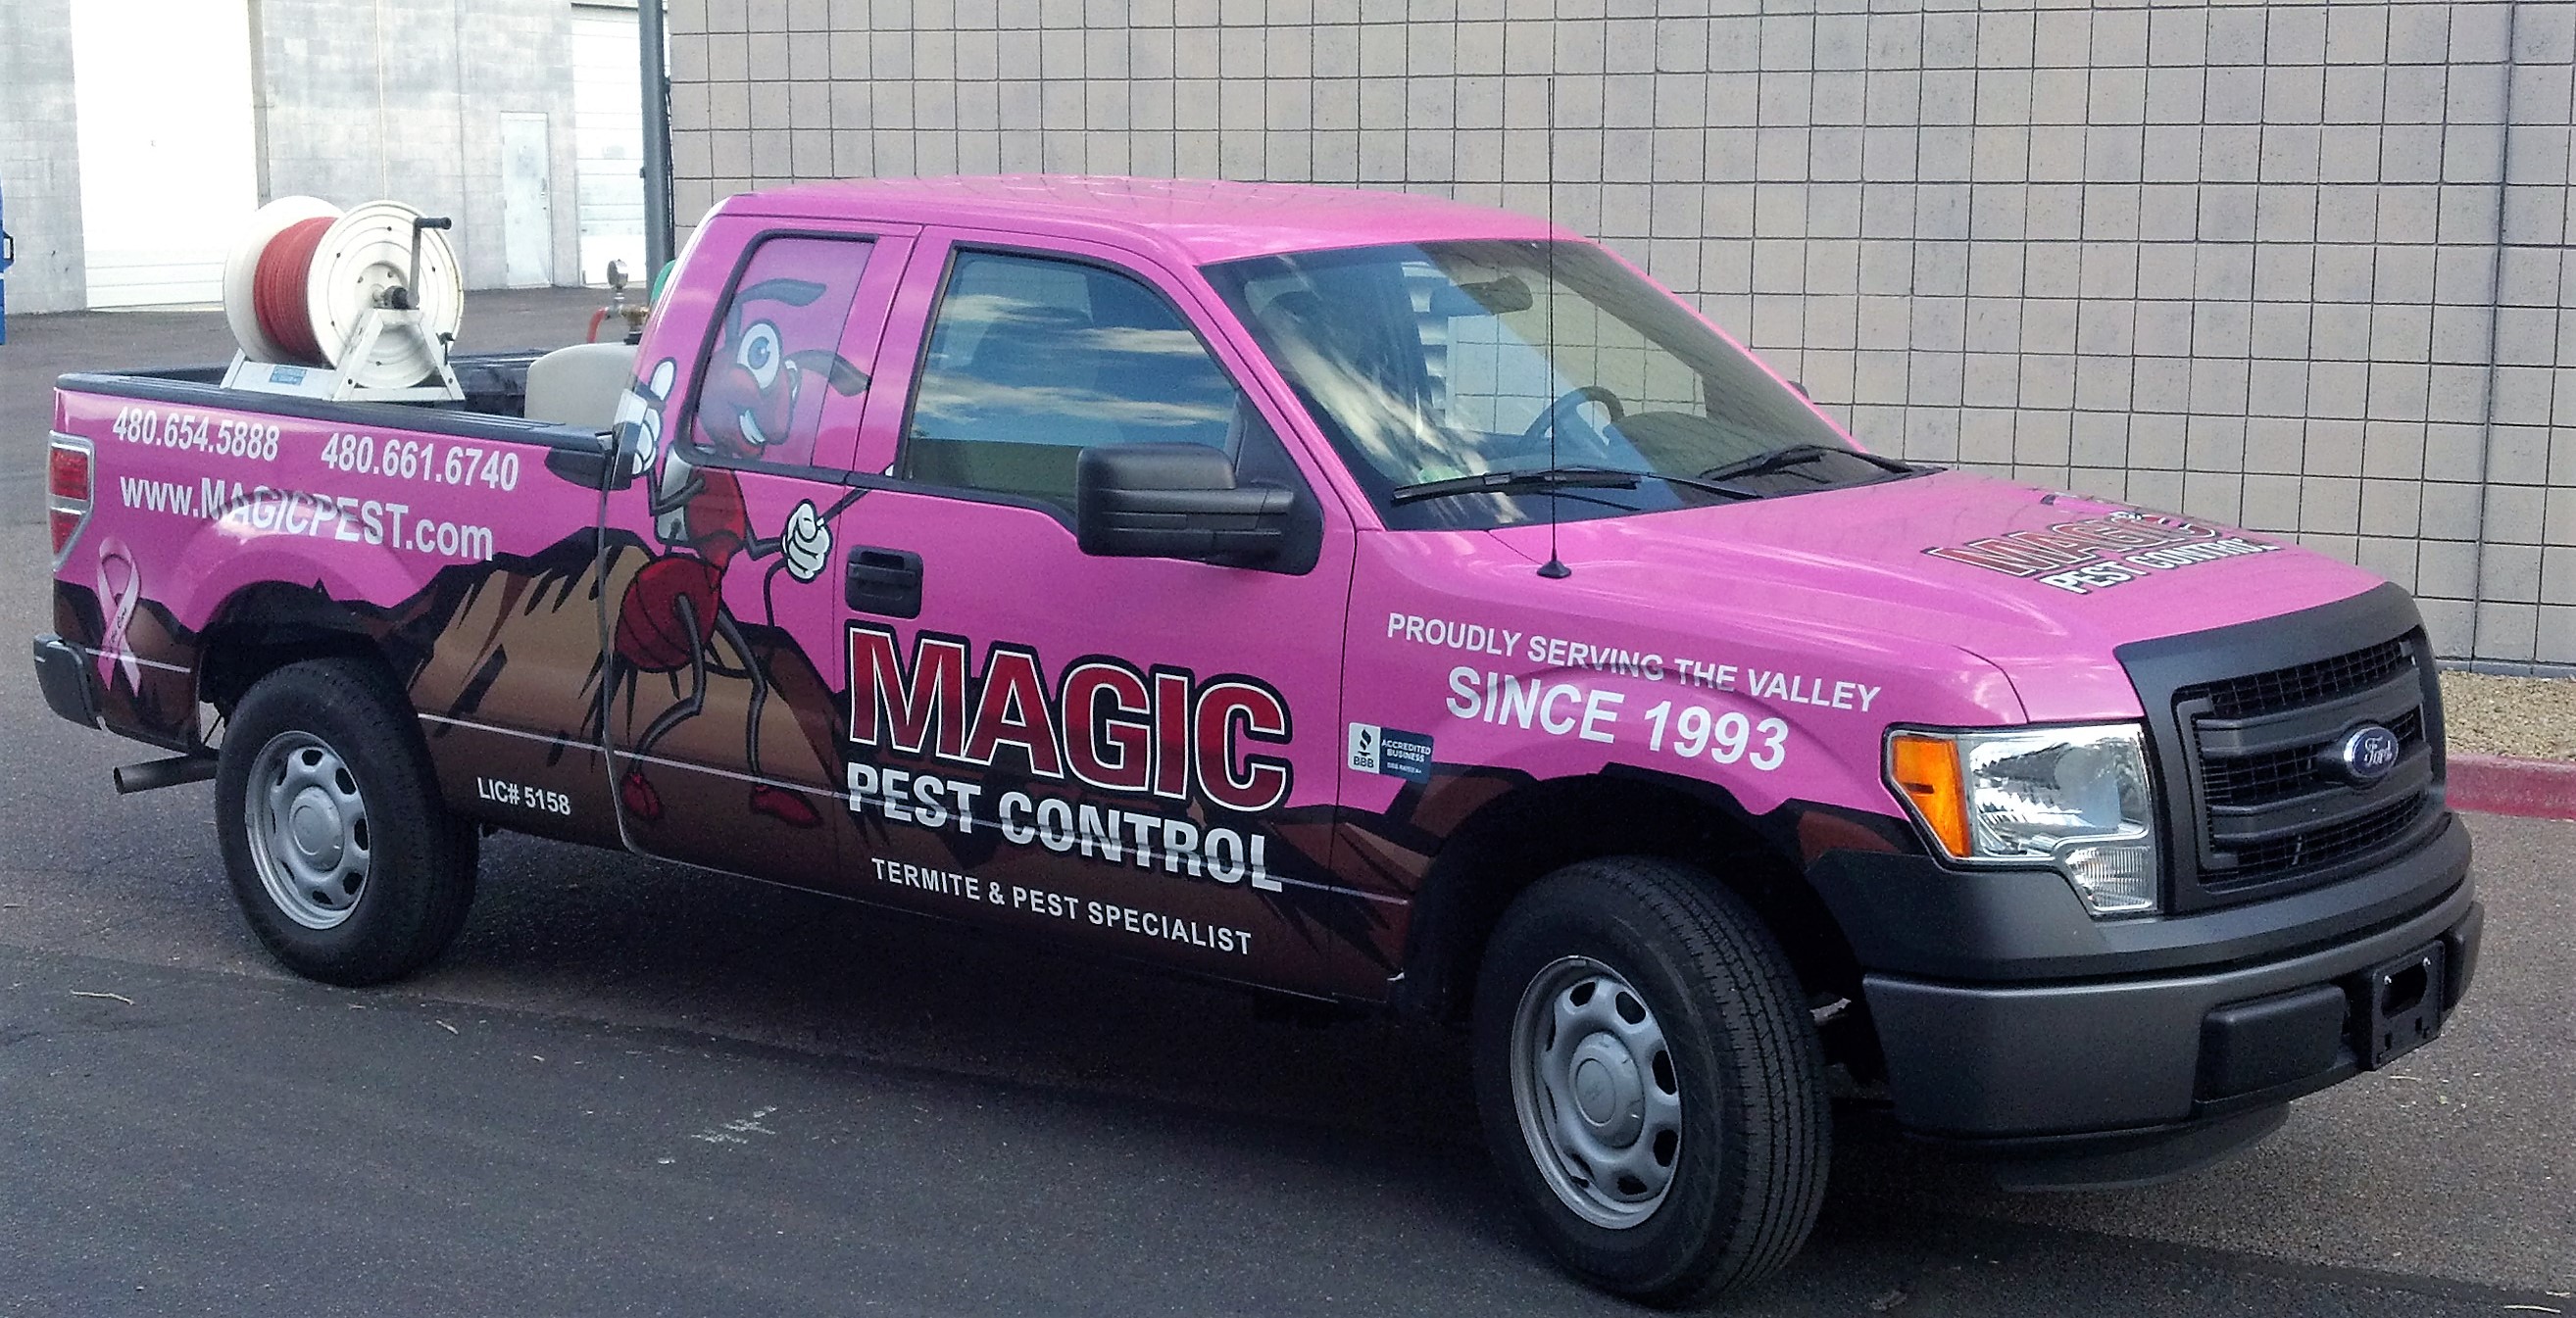 Magic Pest Control vehicle wrap